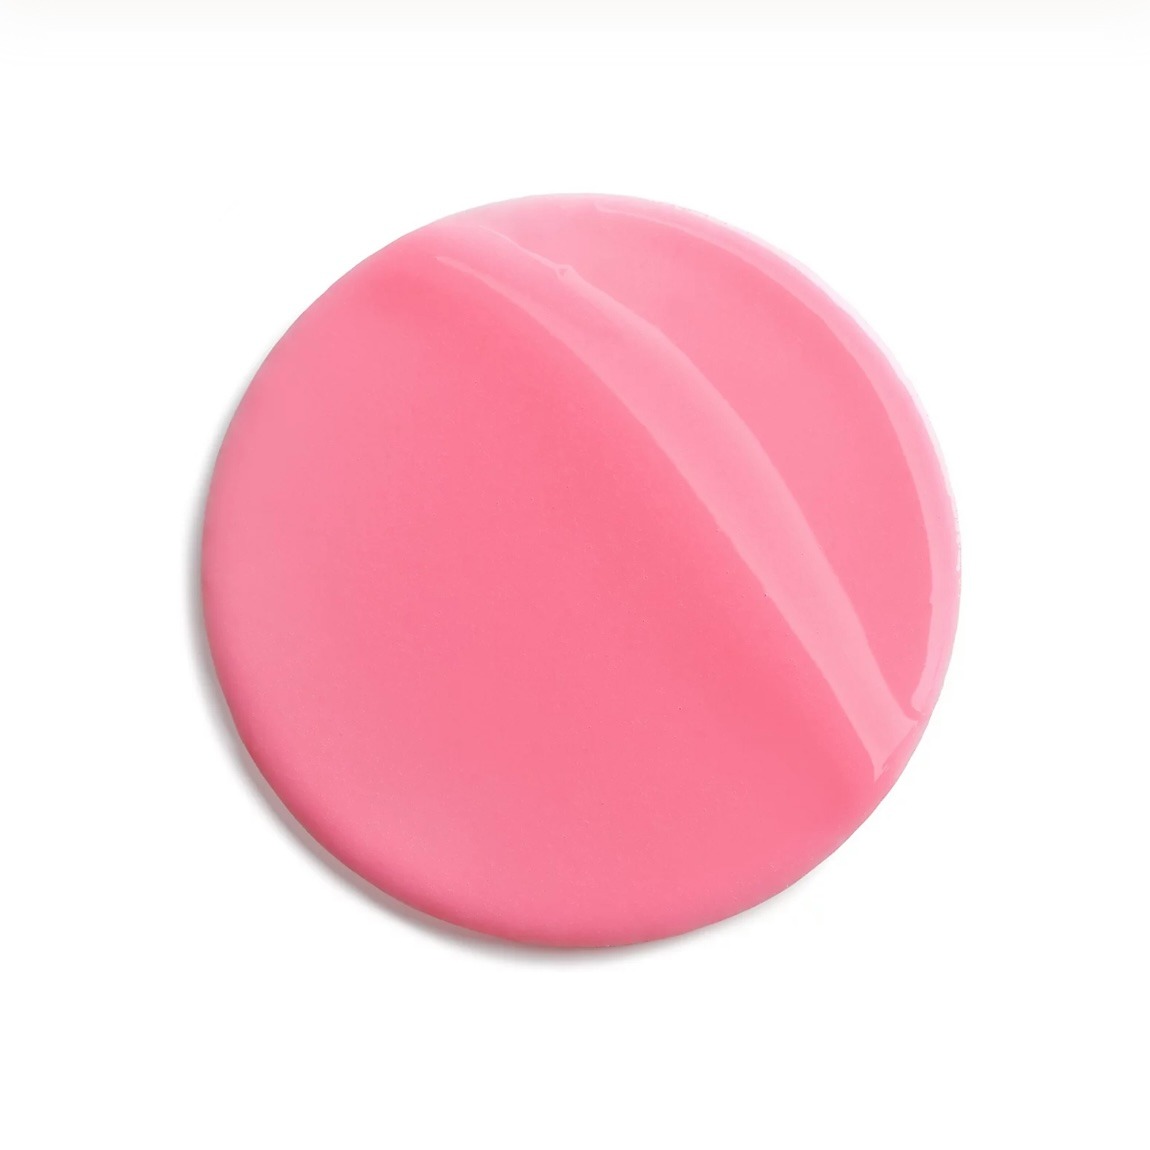 review son duong hermes rosy lip enhancer 27 rose confetti mau son